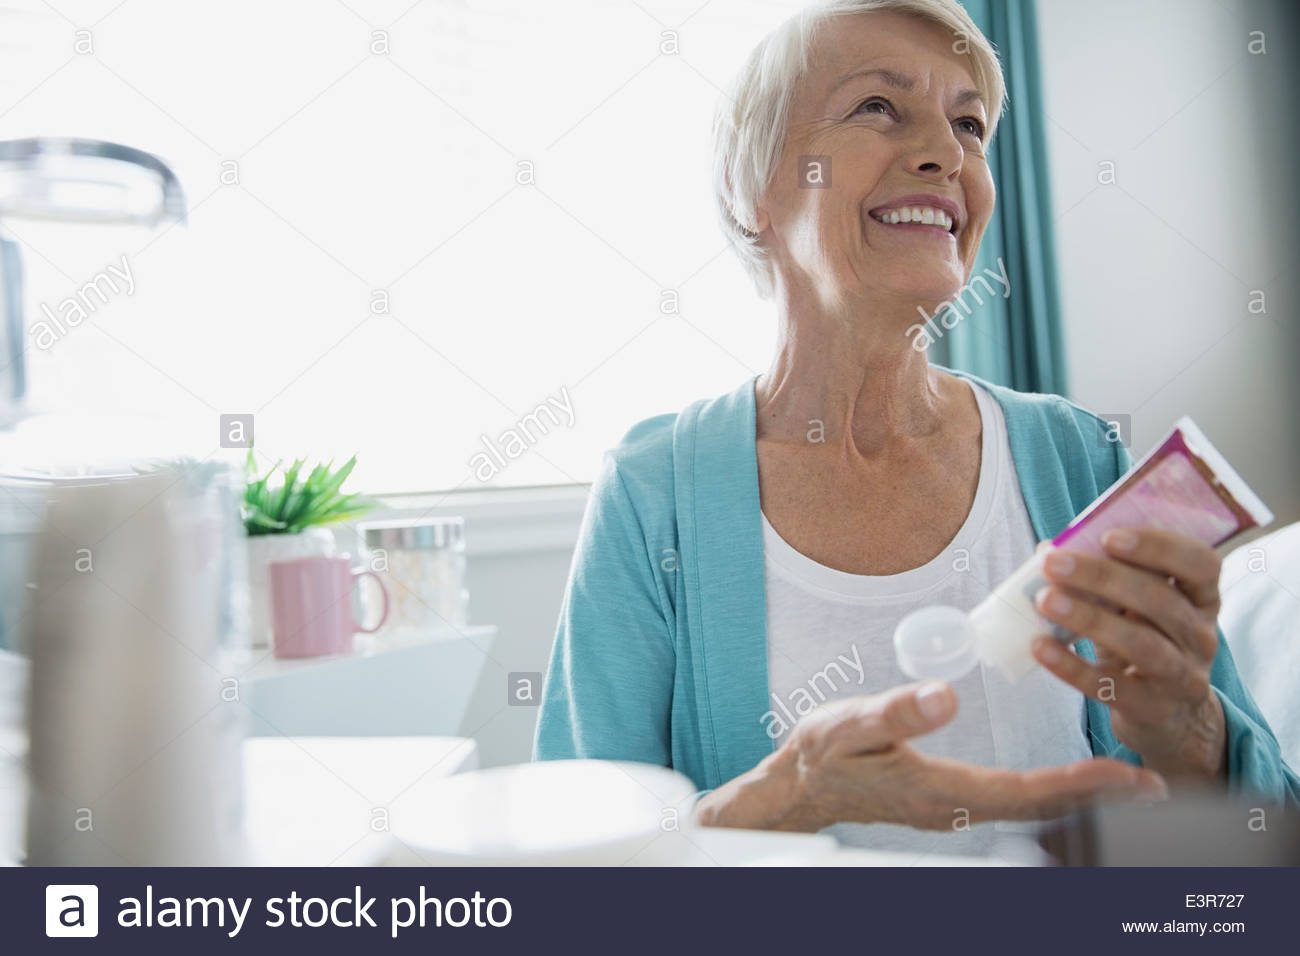 Woman applying moisturizer Stock Photo